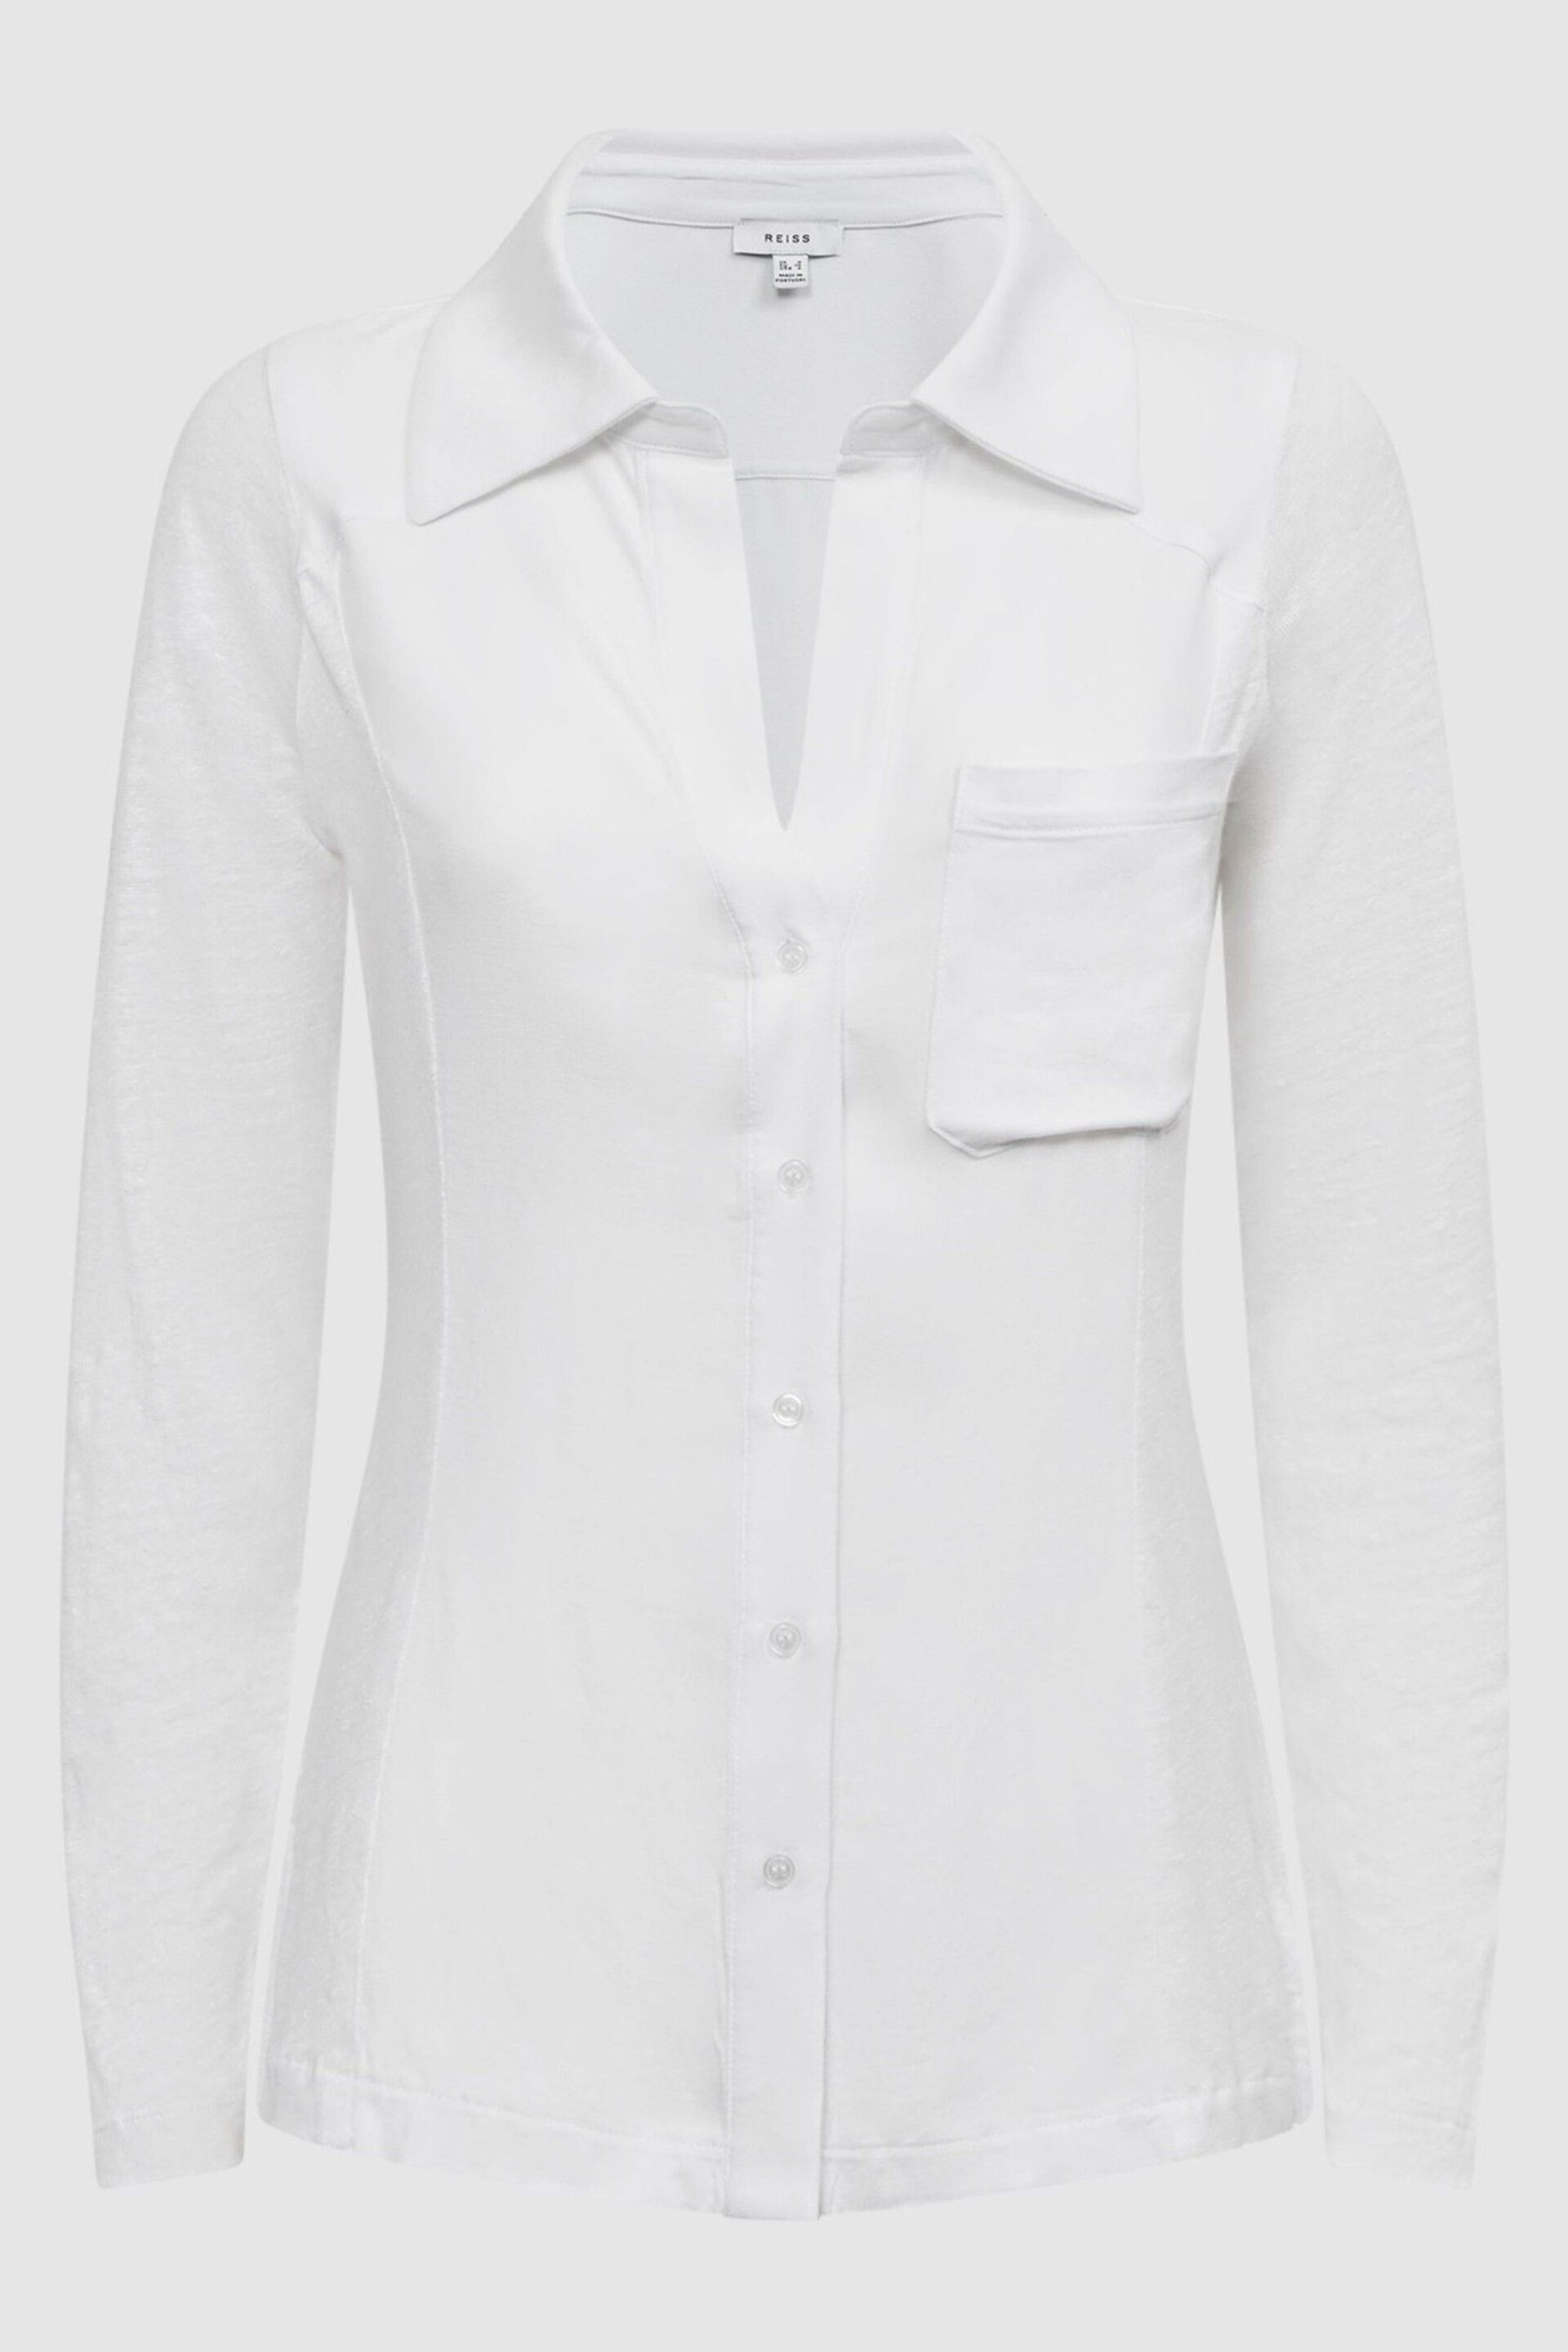 Reiss White Phillipa Linen Sheer Button Through Shirt - Image 2 of 5